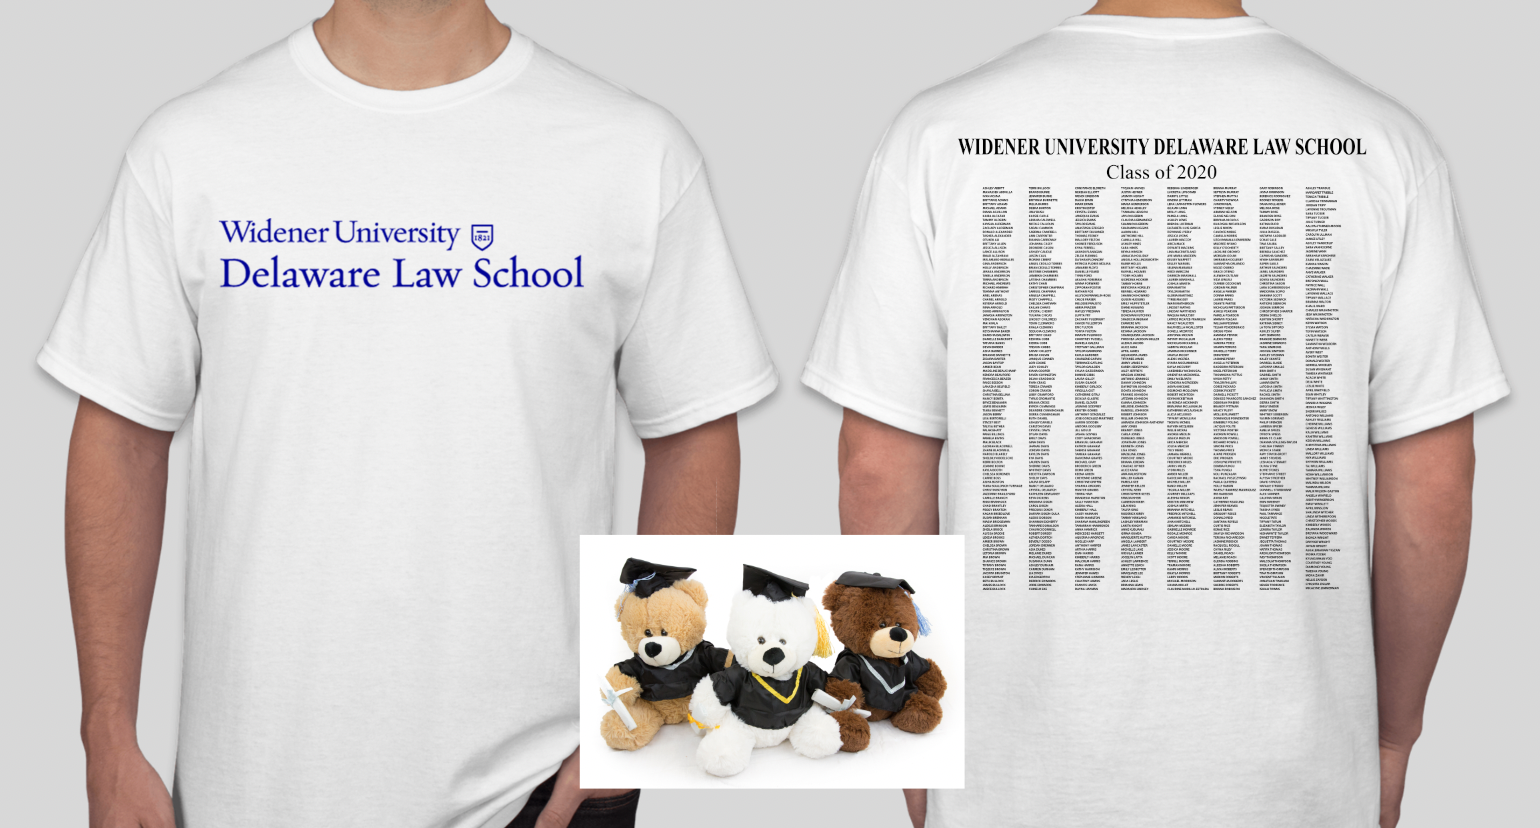 Widener University Delaware Law School : Commencement Group